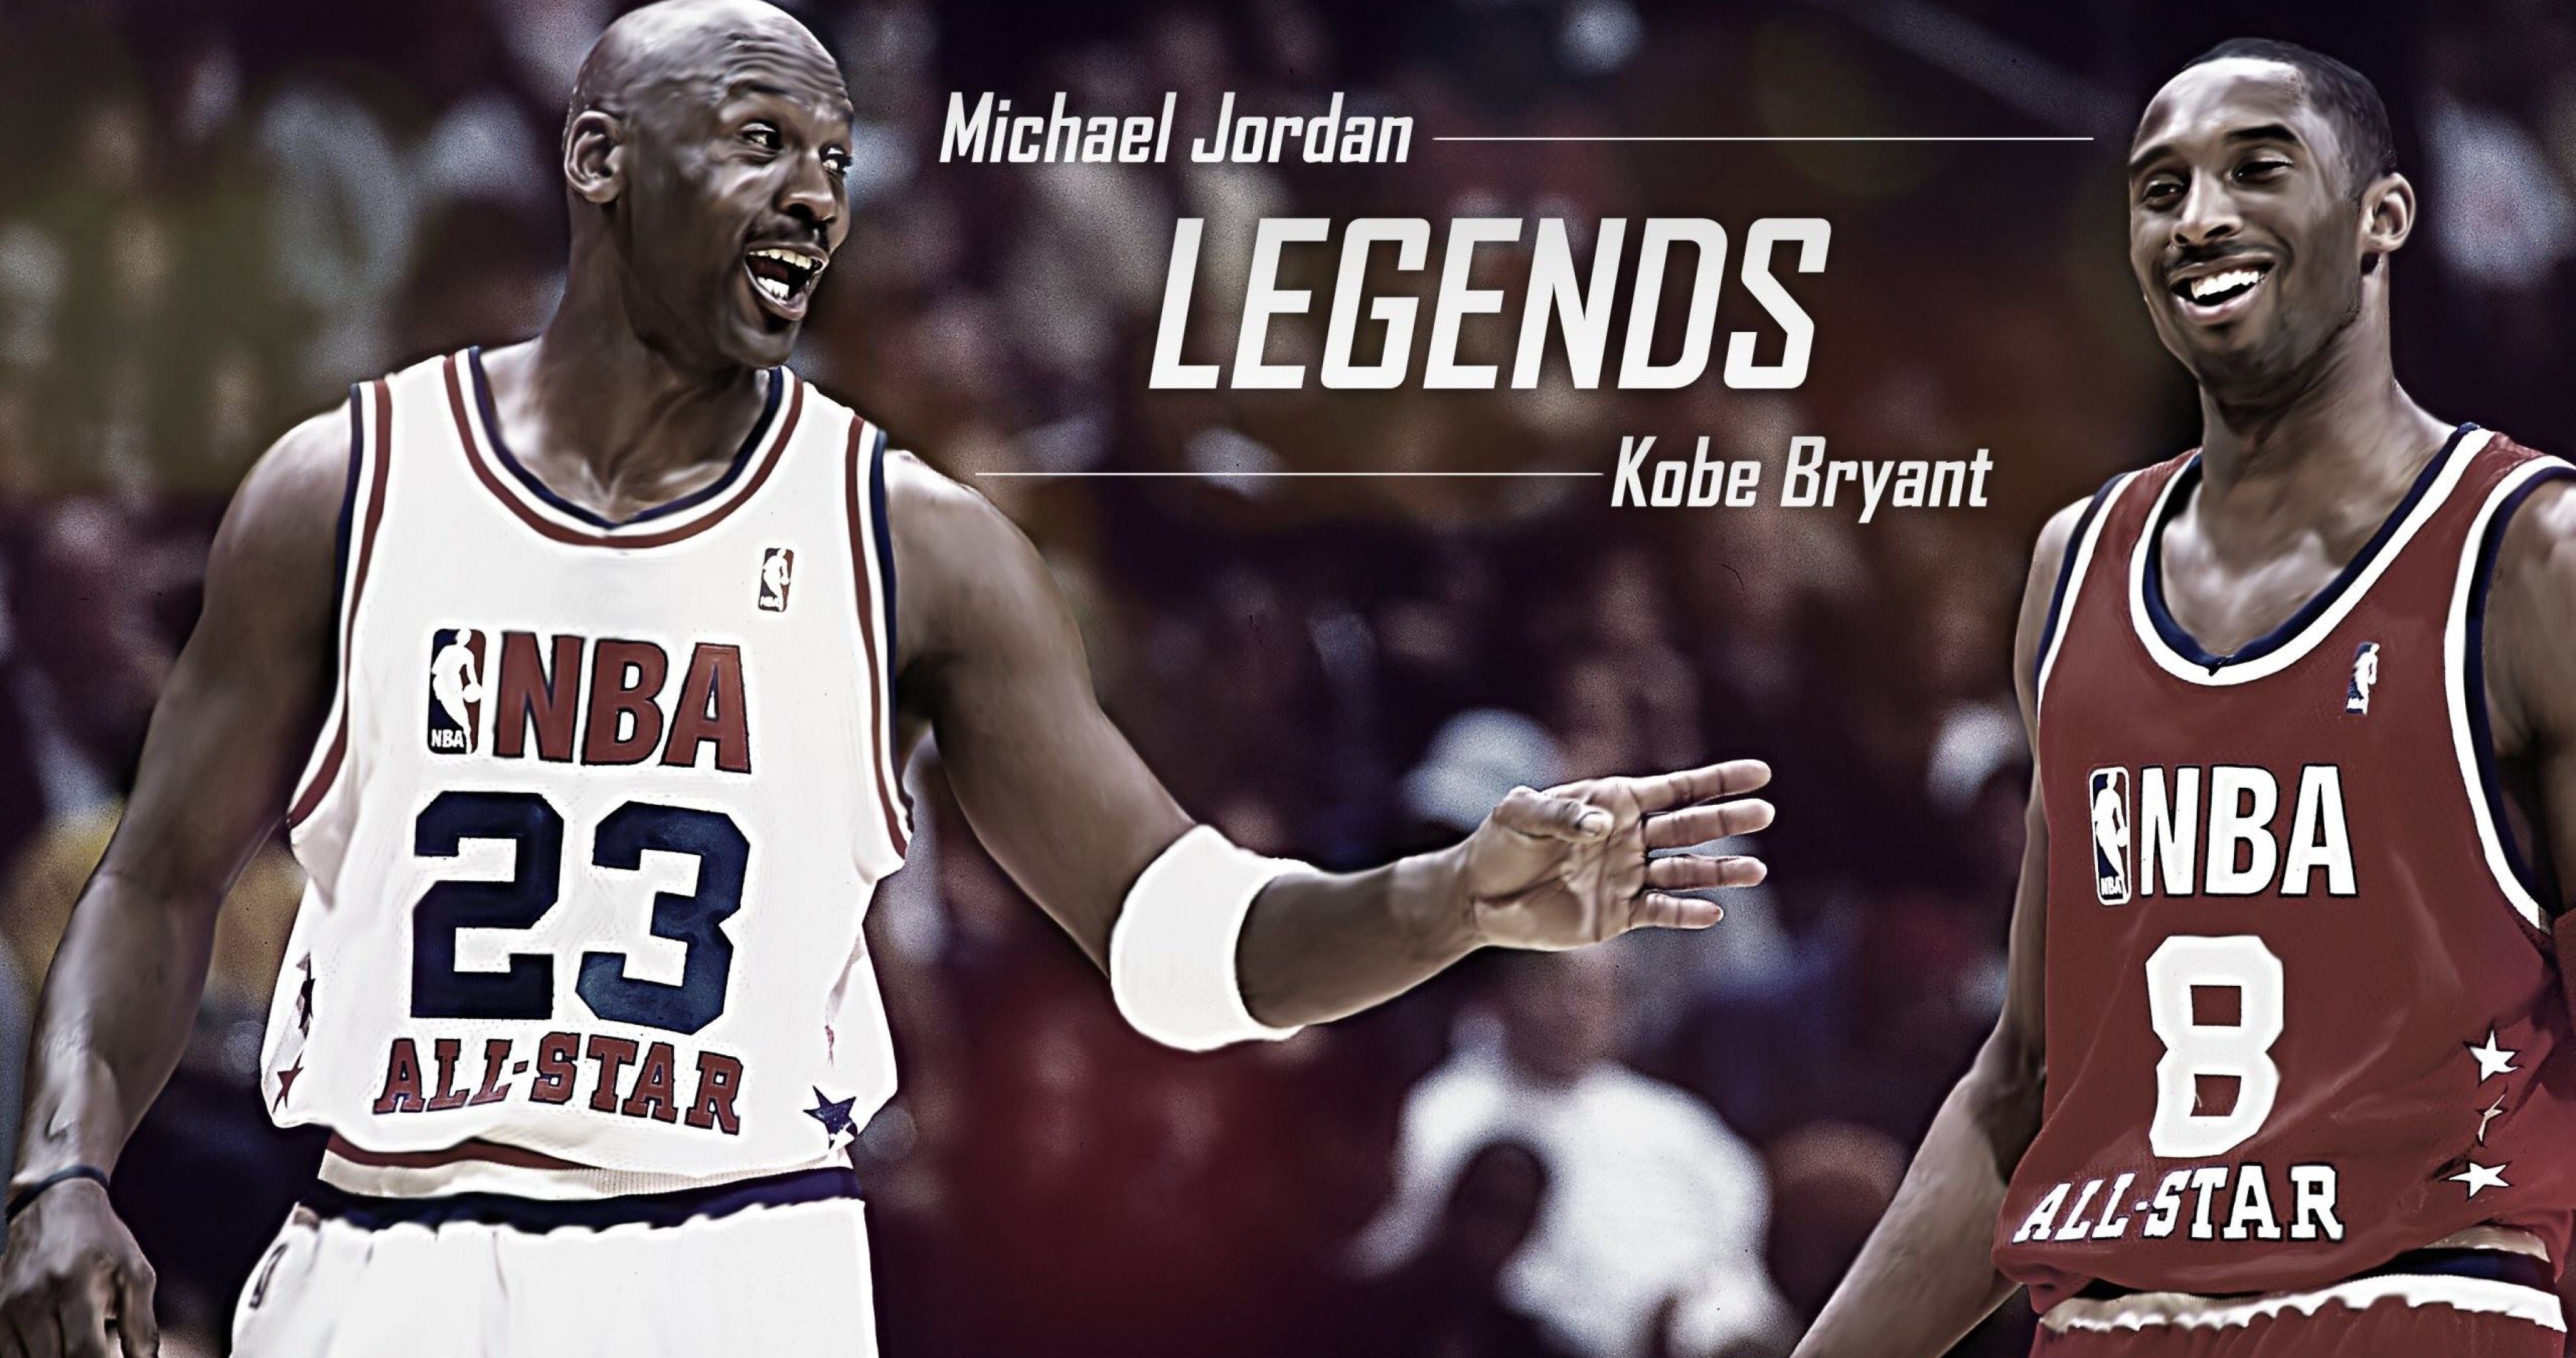 Wallpaper Nba Live Jordan And Kobe Bryant All Star